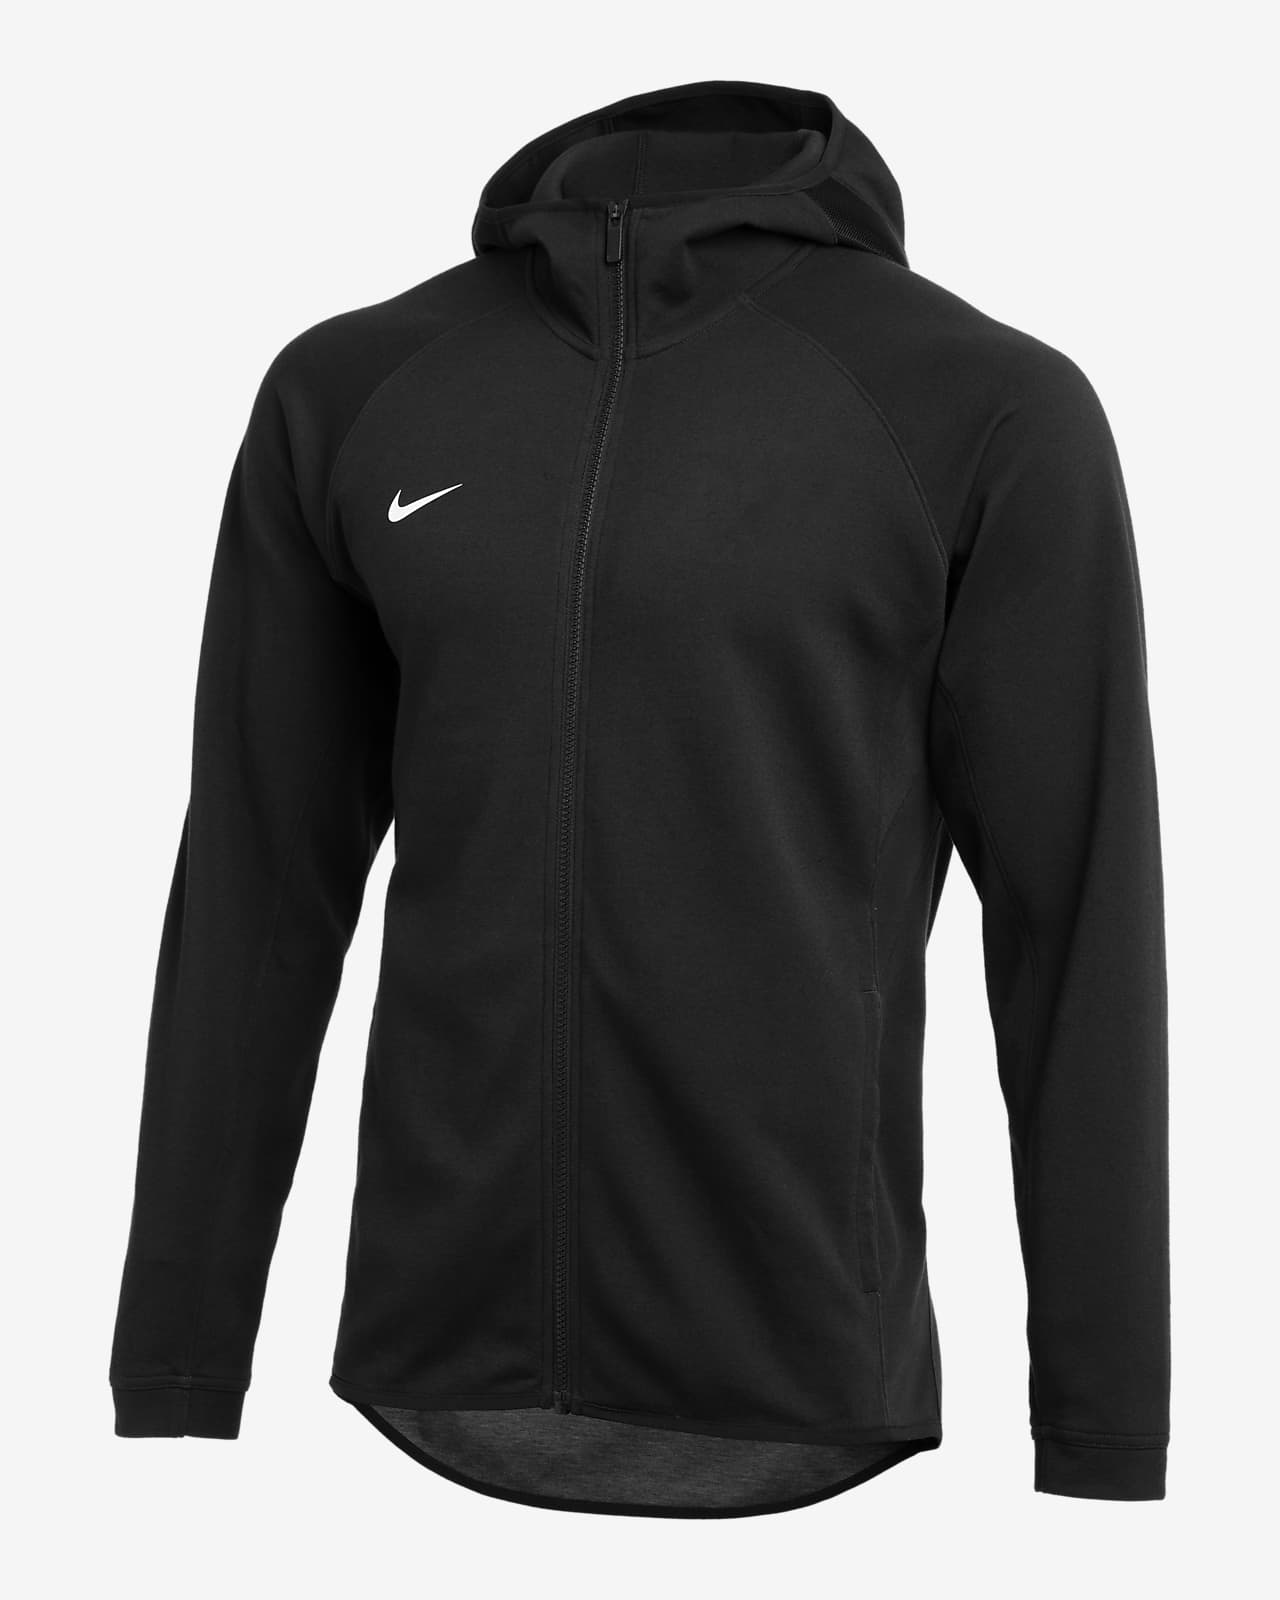 Nike Air Jacket Black & White Green Track,Basketball Warm Up Men's Medium